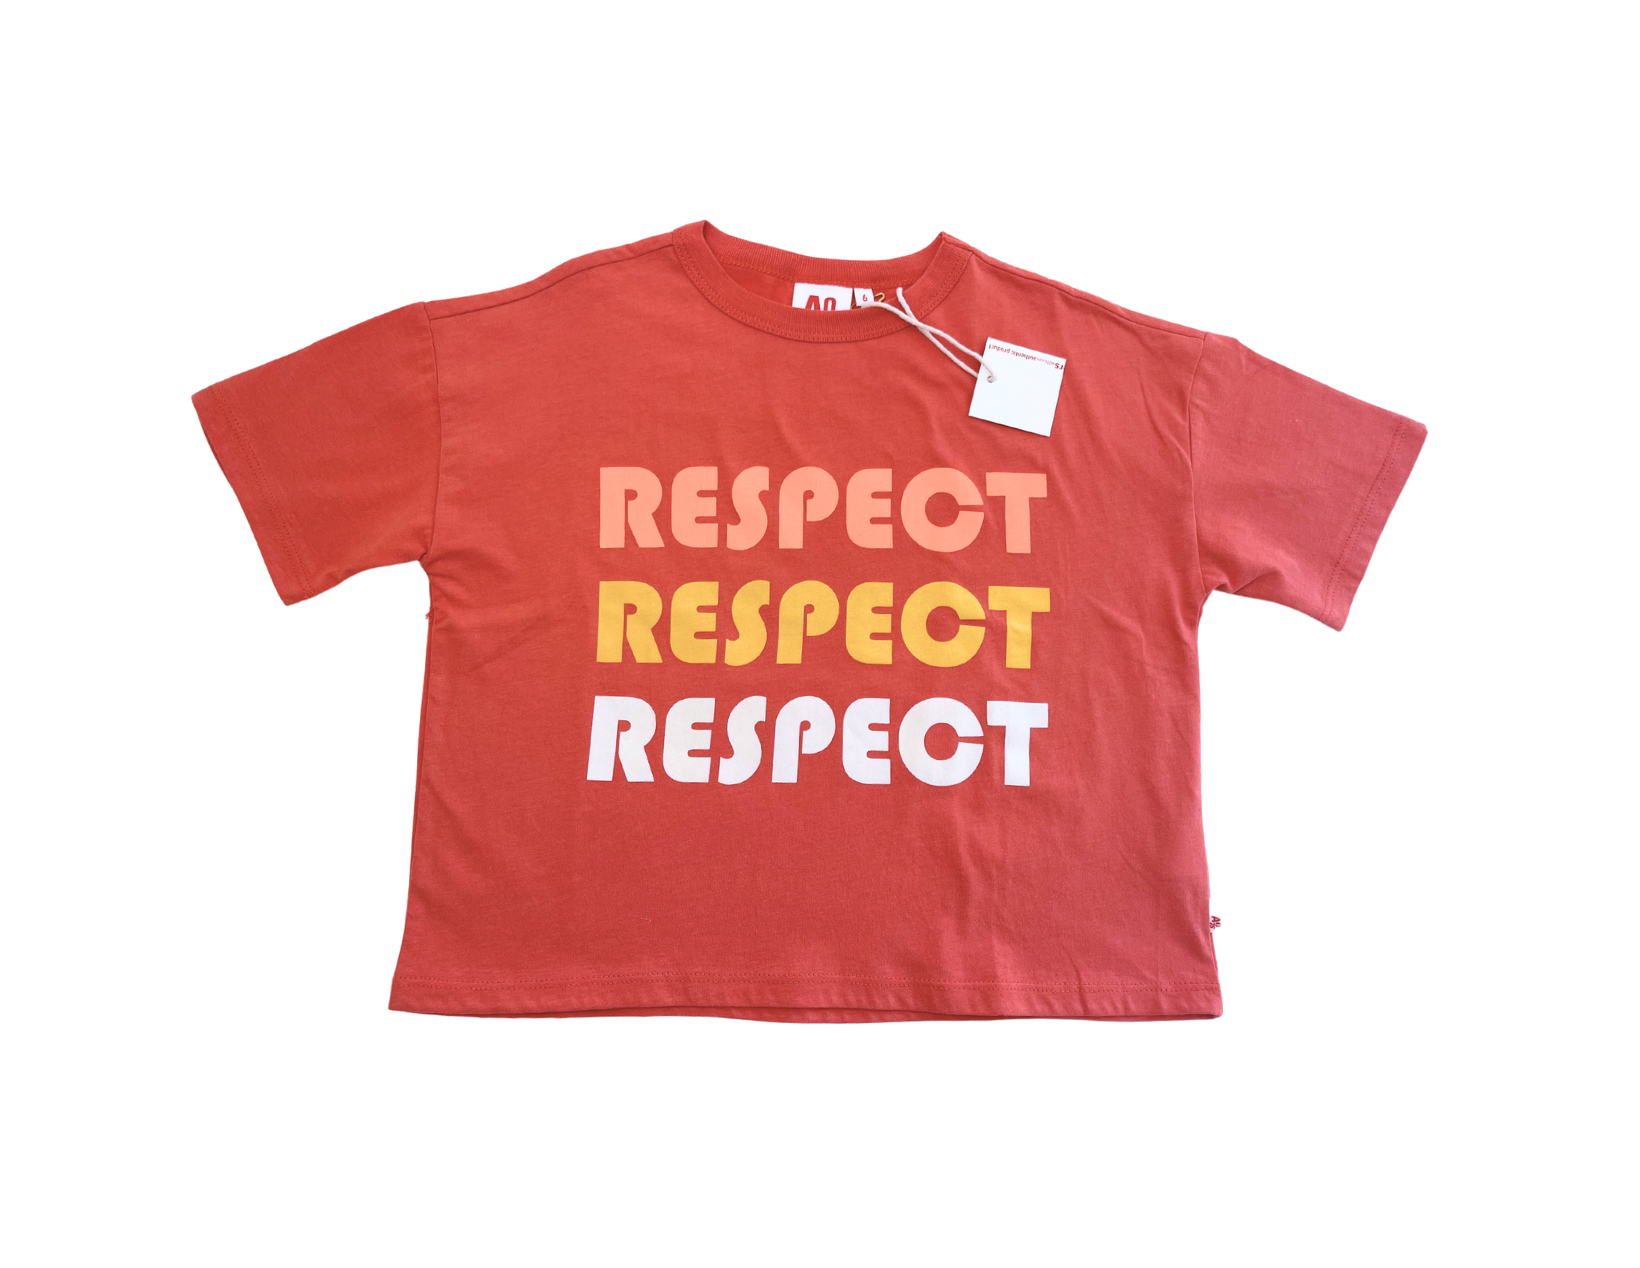 A076 - T-shirt rouge "Respect" - 6 ans